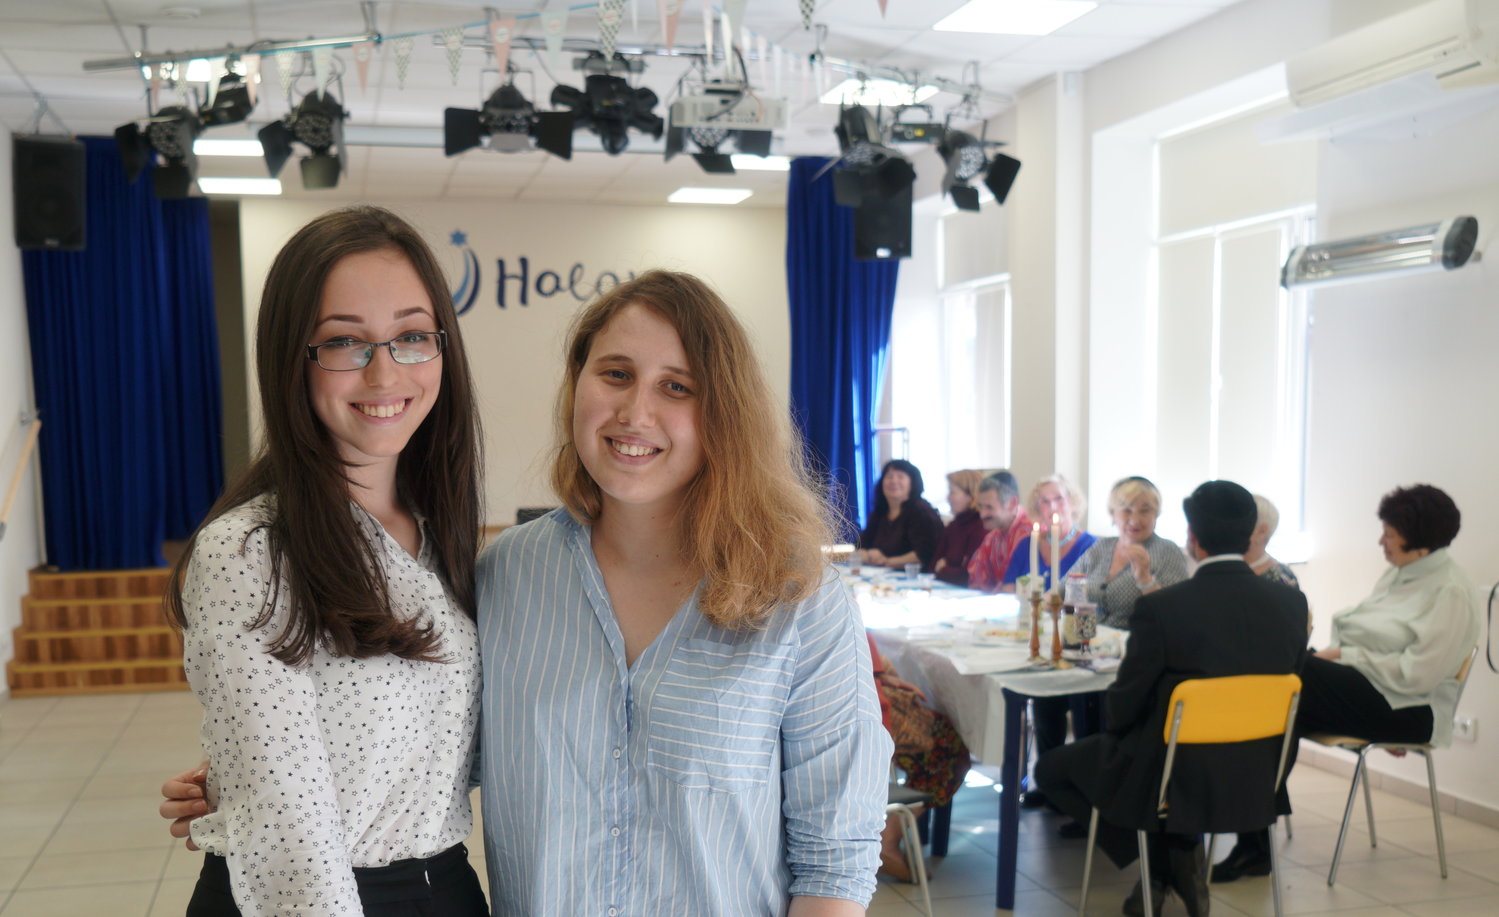 Women at a Shabbat reception at the Halom Jewish Community Center in Kiev, Ukraine, on Sept. 8, 2017.